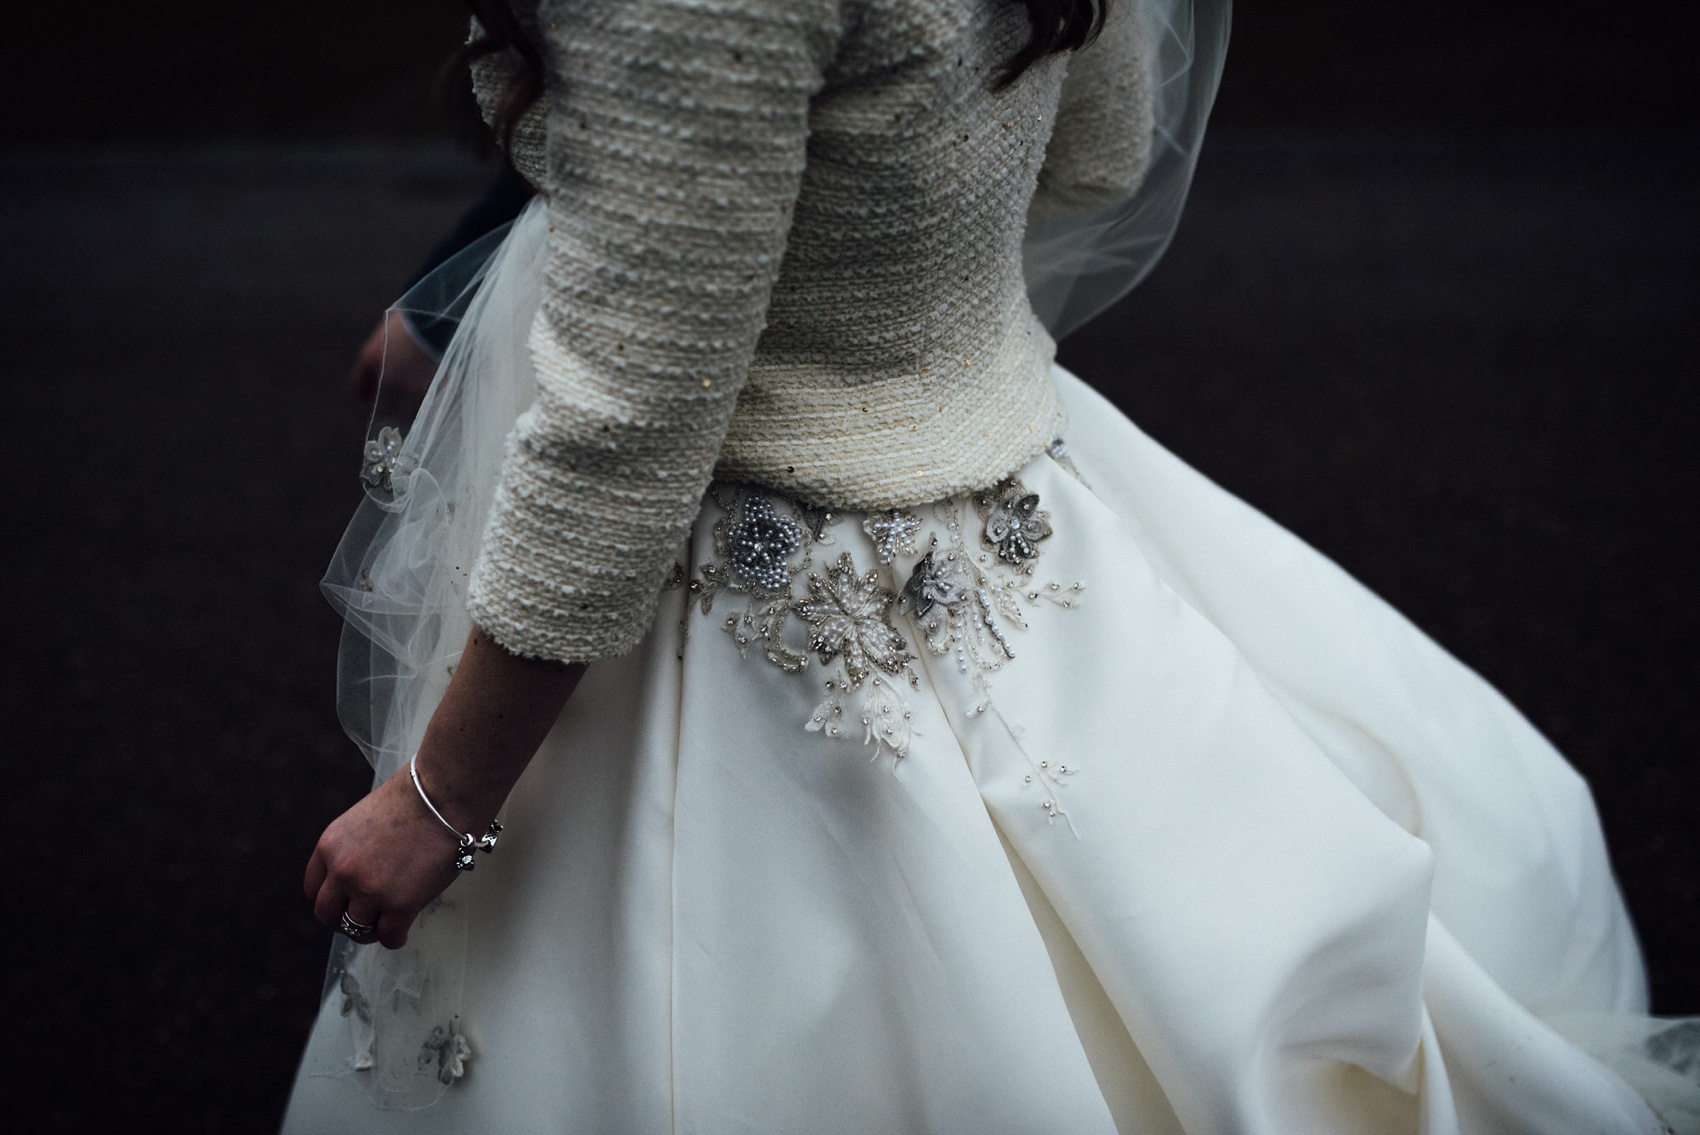 35 Bride made her own wedding dress